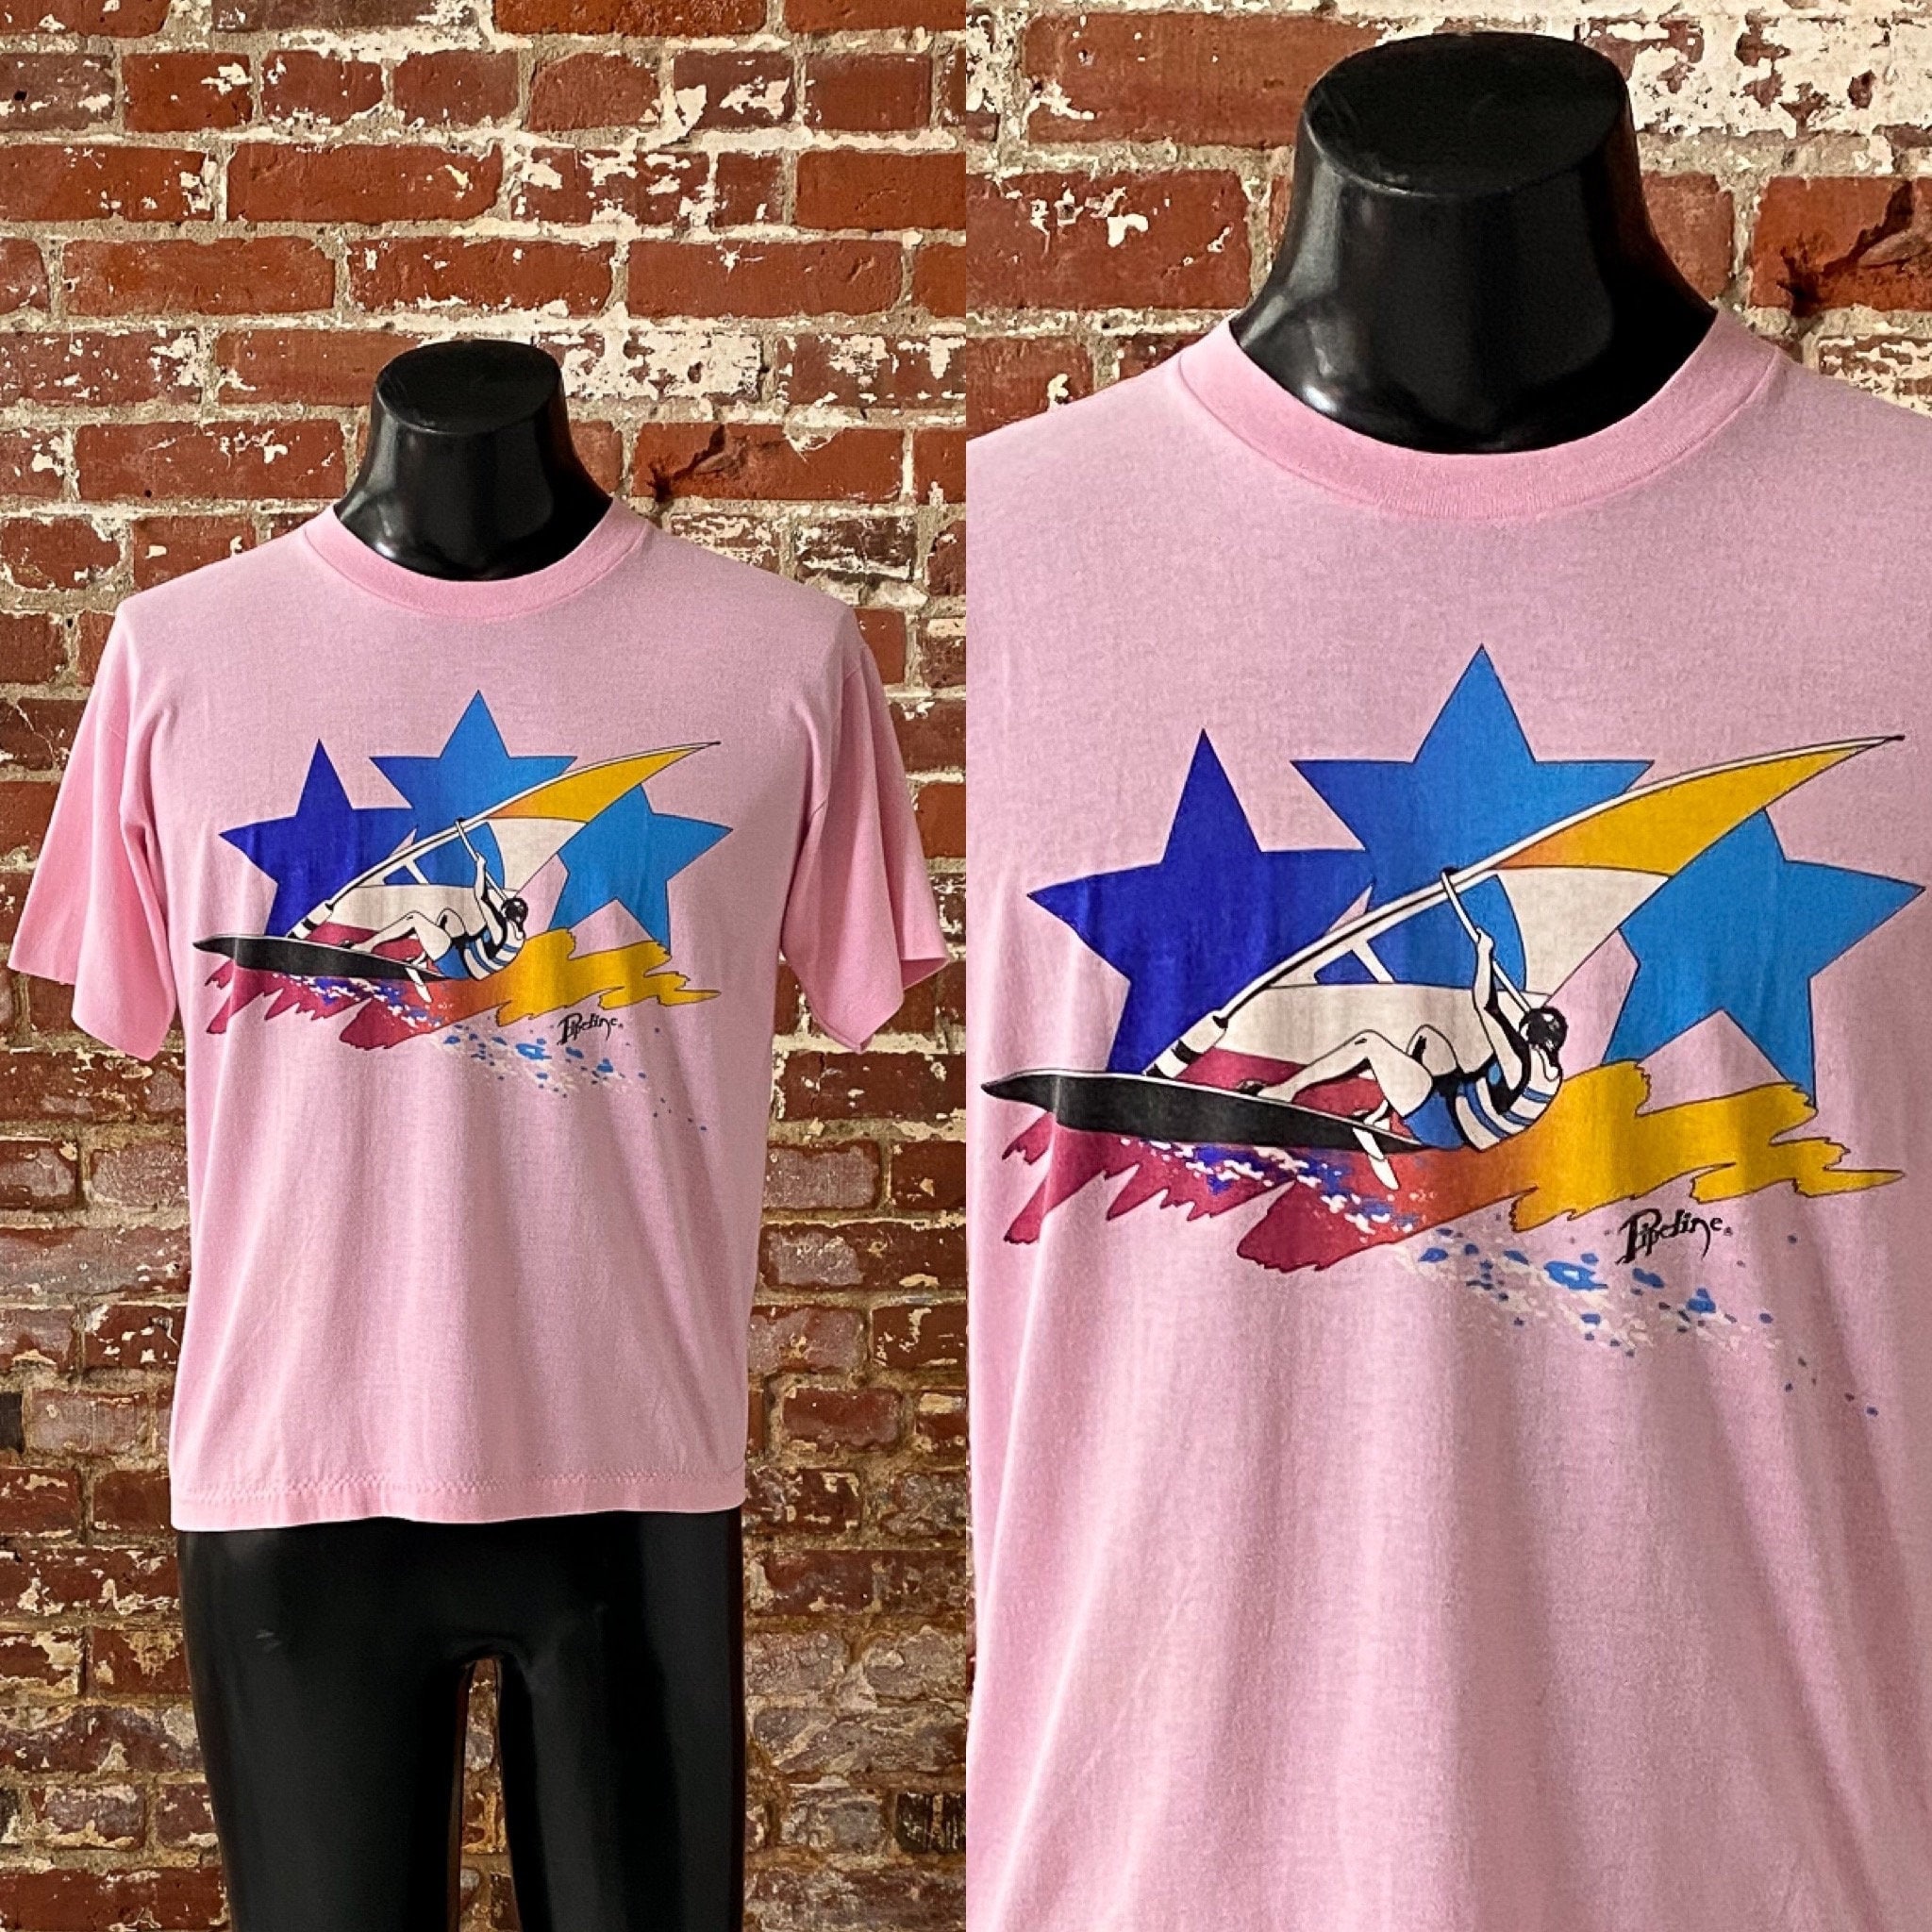 Soft light weight striped Gone fishing themed shirt – Bubblegum